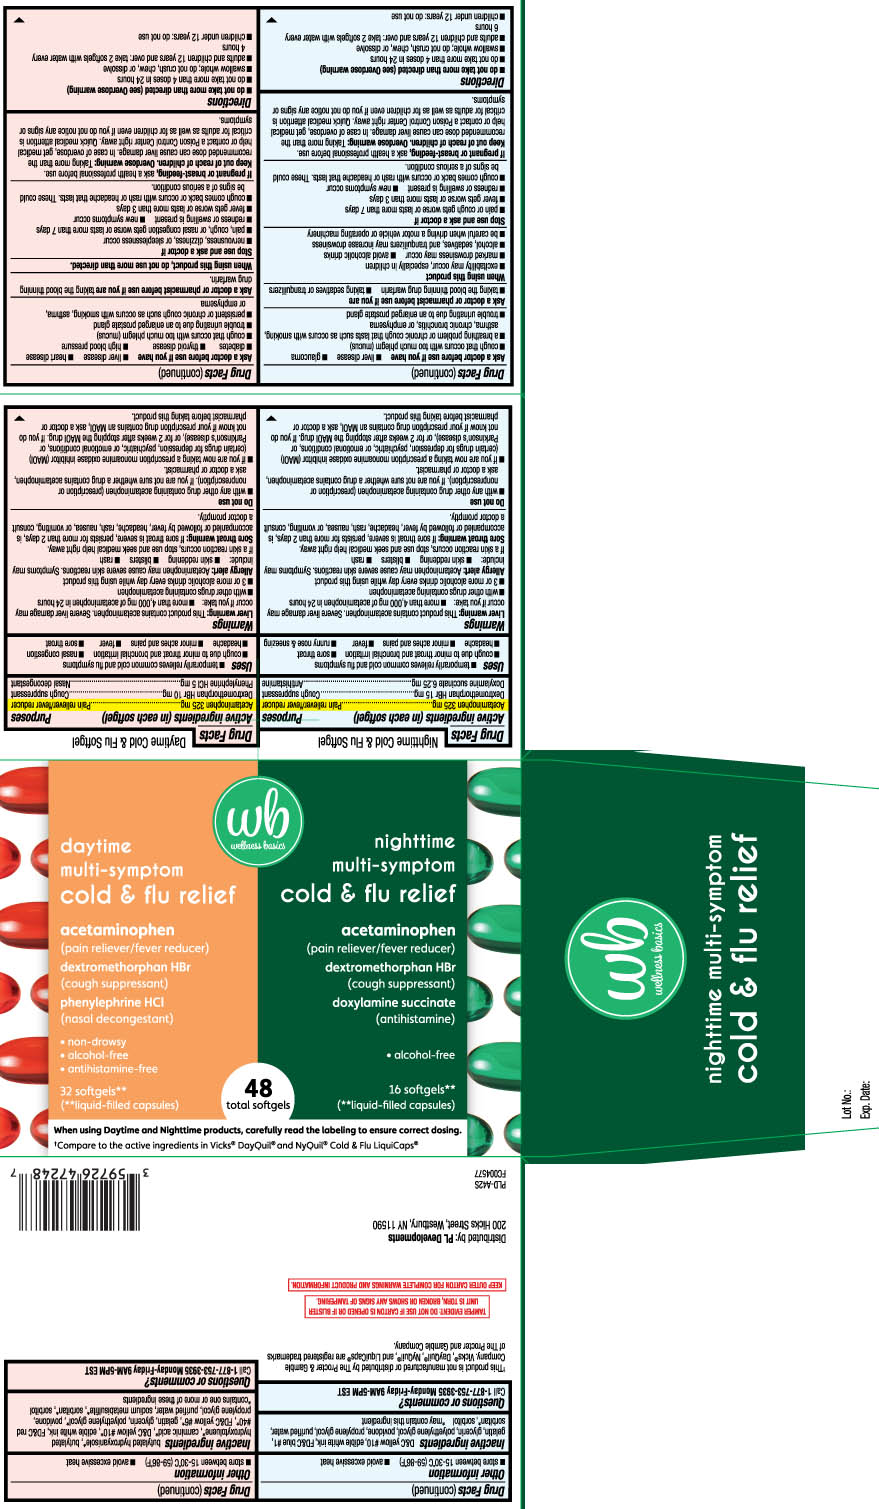 Acetaminophen 325 mg, Dextromethorphan HBr 10 mg, Phenylephrine HCI 5 mg Acetaminophen 325 mg, Dextromethorphan HBr 15 mg, Doxylamine Succinate 6.25 mg